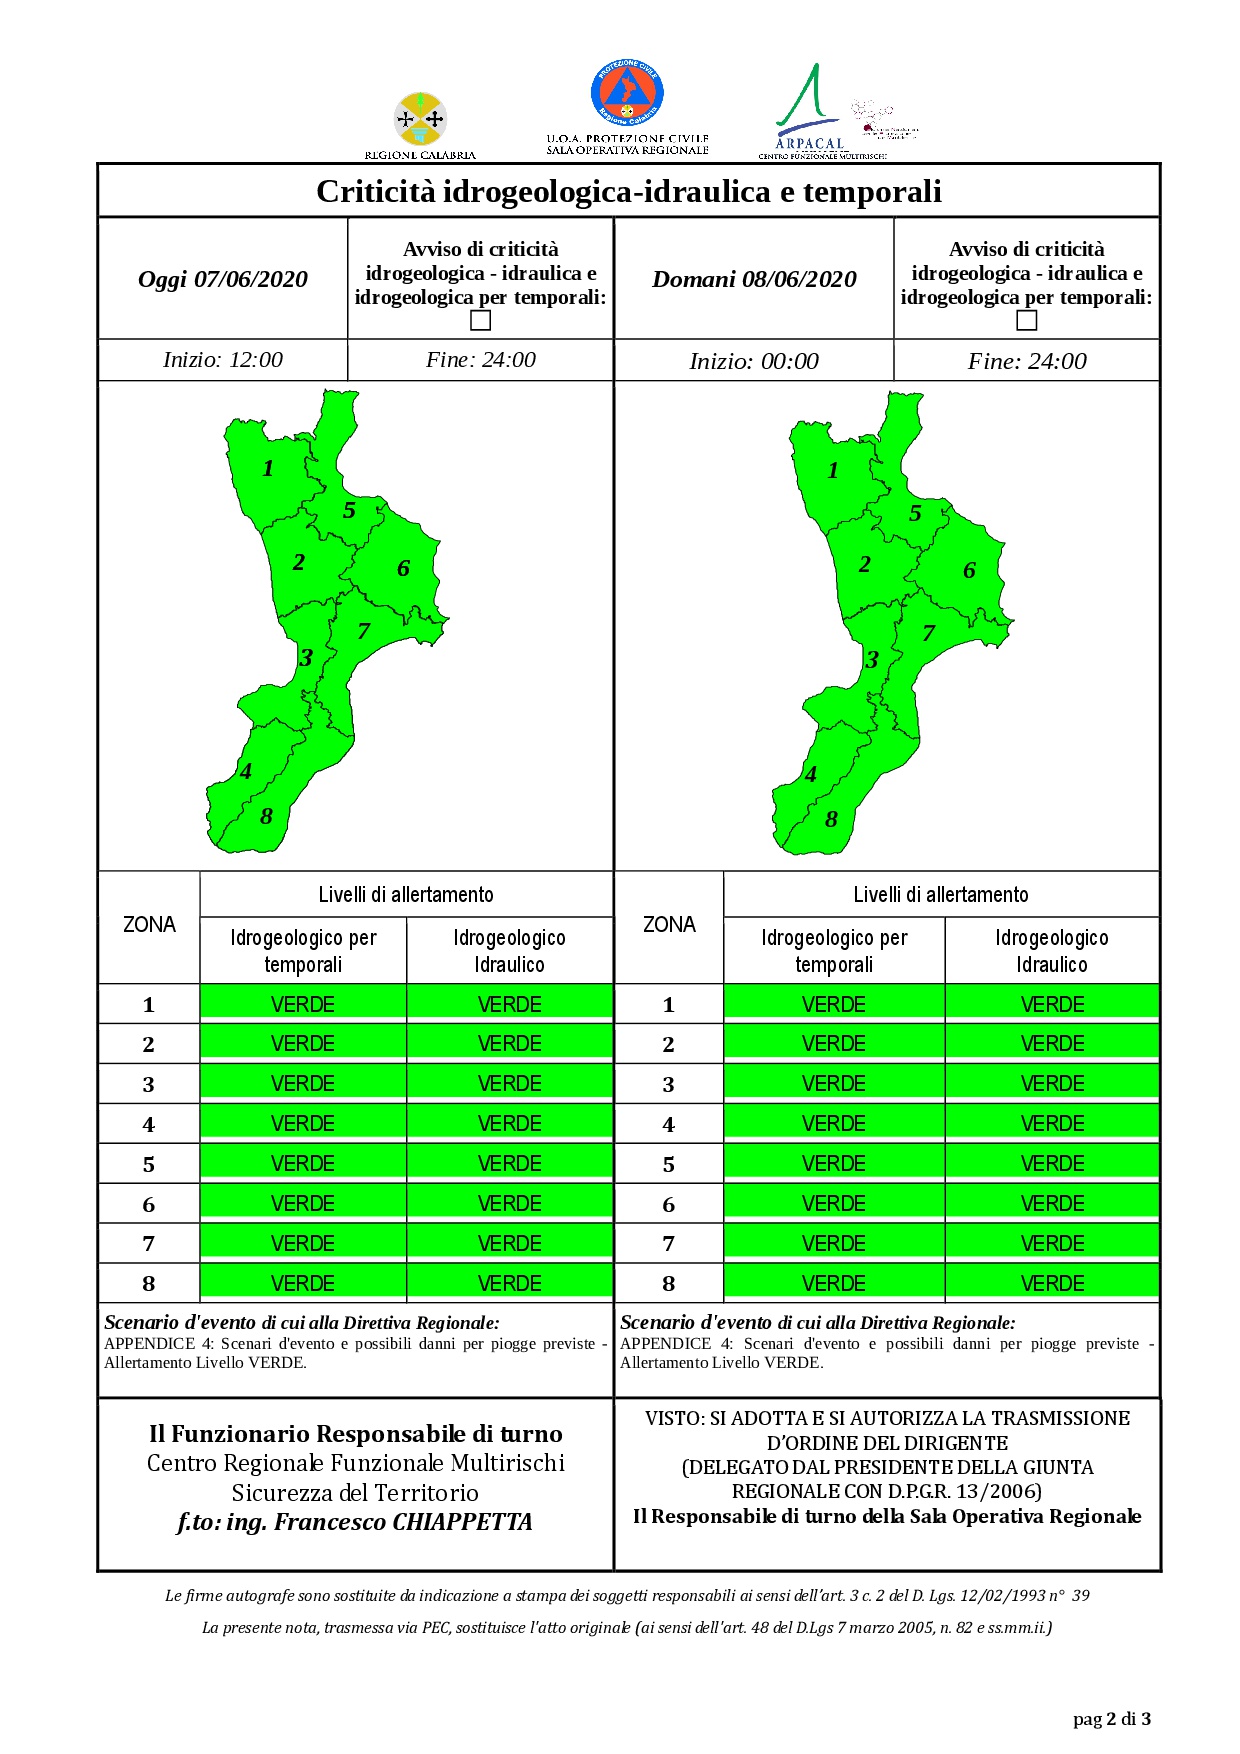 Criticità idrogeologica-idraulica e temporali in Calabria 07-06-2020